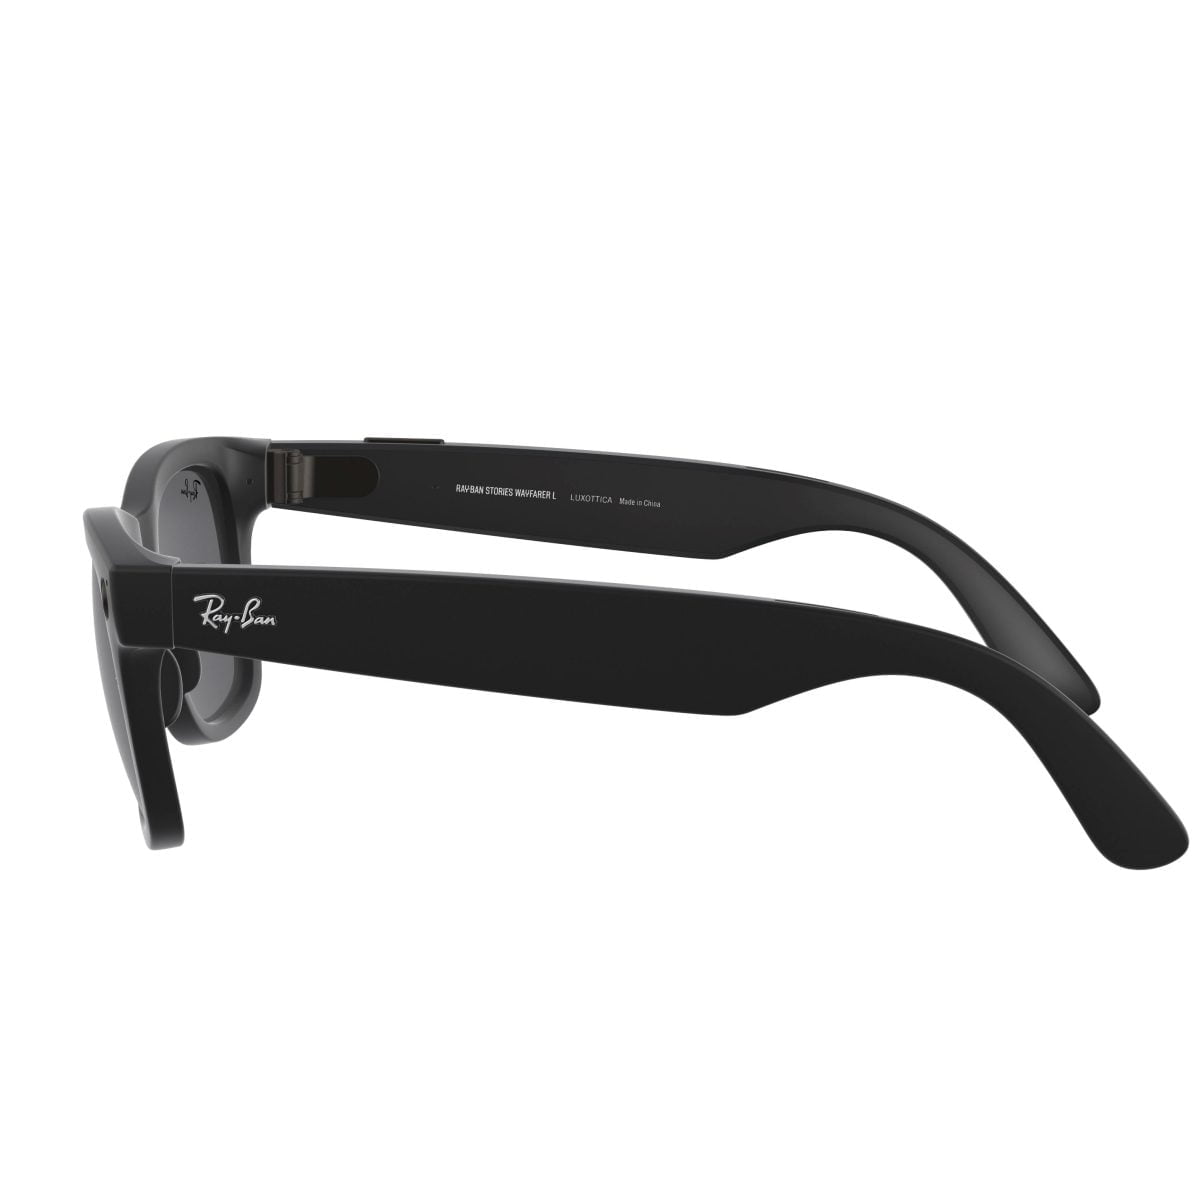 Ray Ban Stories Wayfarer Smart Glasses 53Mm Matte Black / Dark Gray